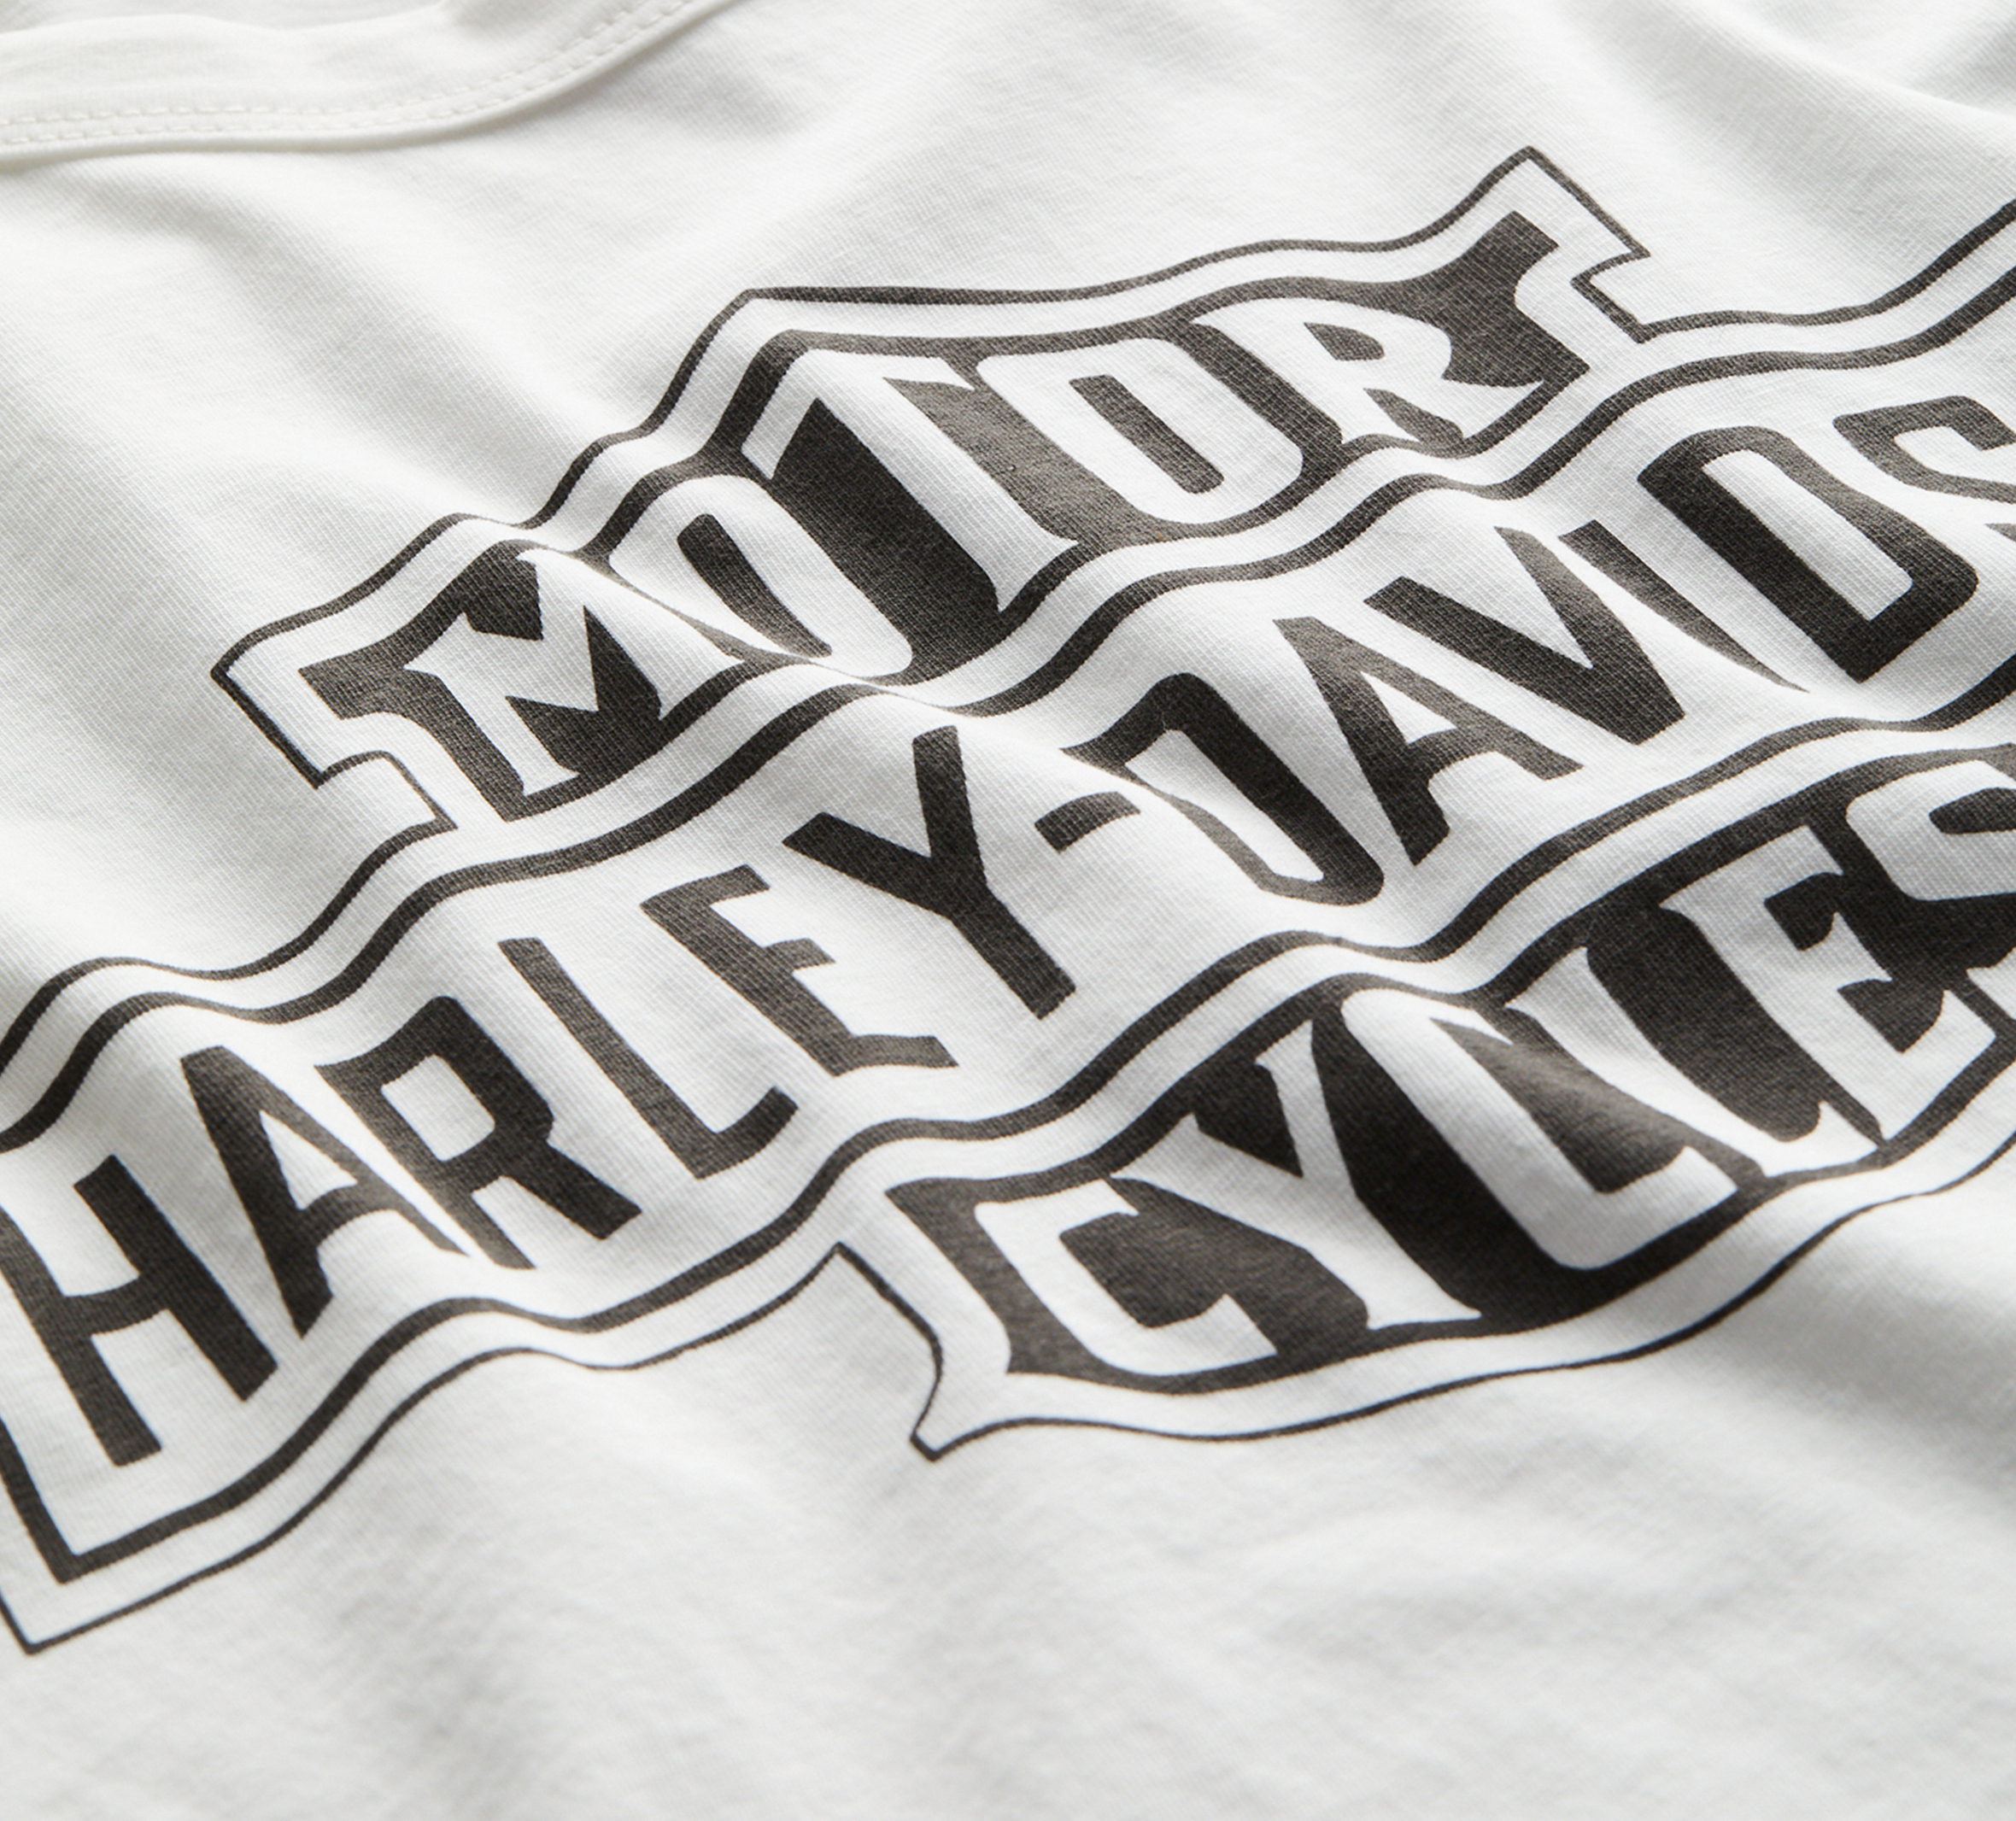 Harley-Davidson x Champion by Todd Snyder - Harley Crest Tee 